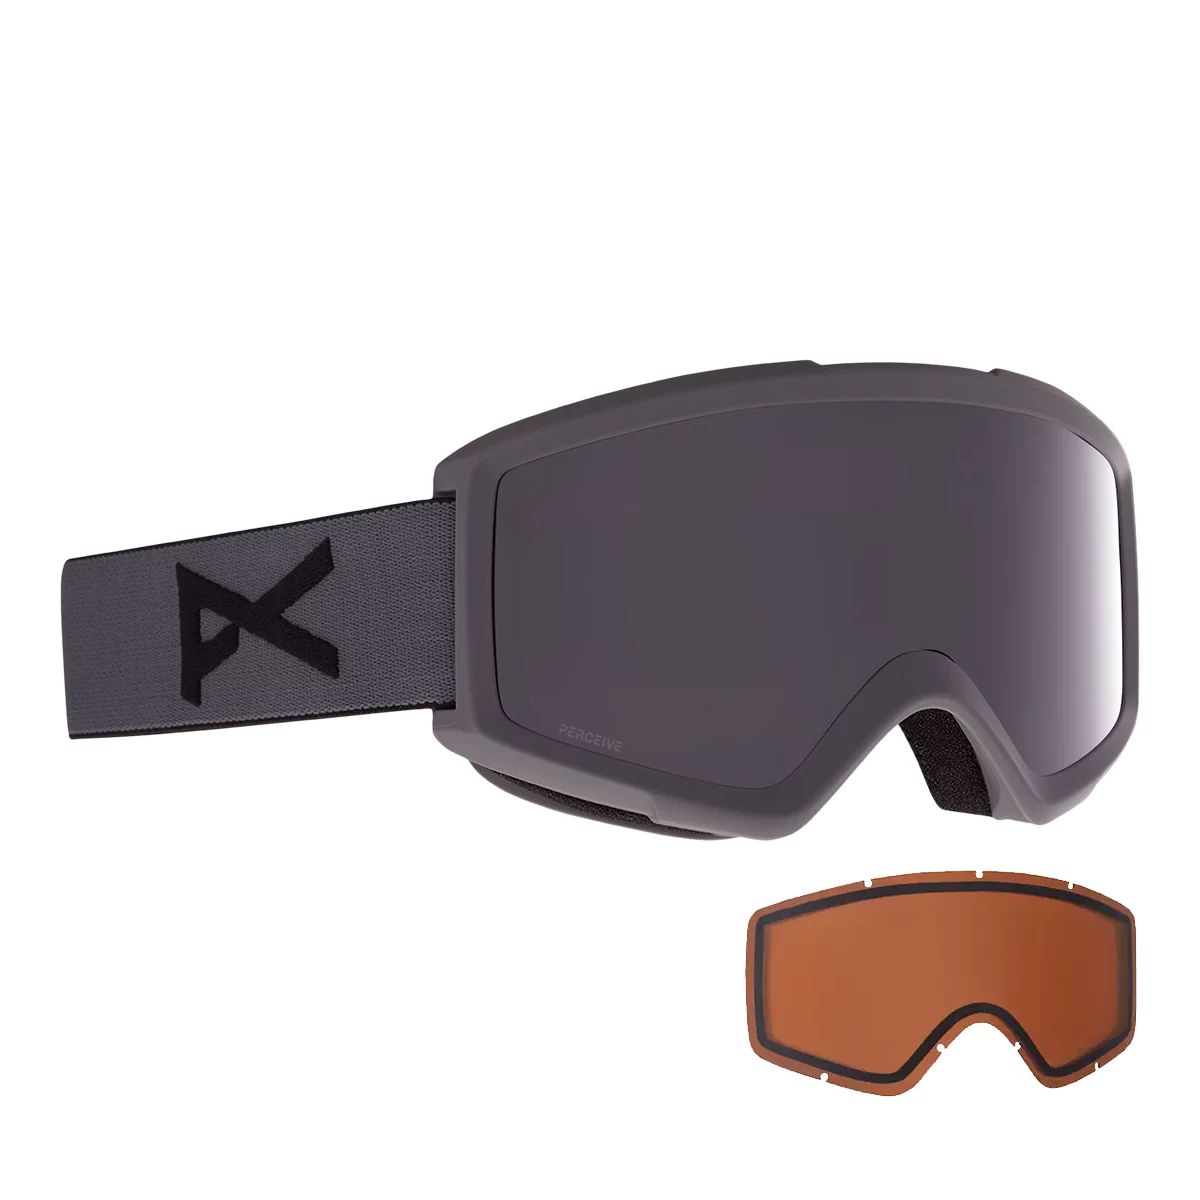 Anon Helix 2.0 Ski & Snowboard Goggles 2020/21 - Stealth Black with Perceive Sunny Onyx Lens + Bonus Lens